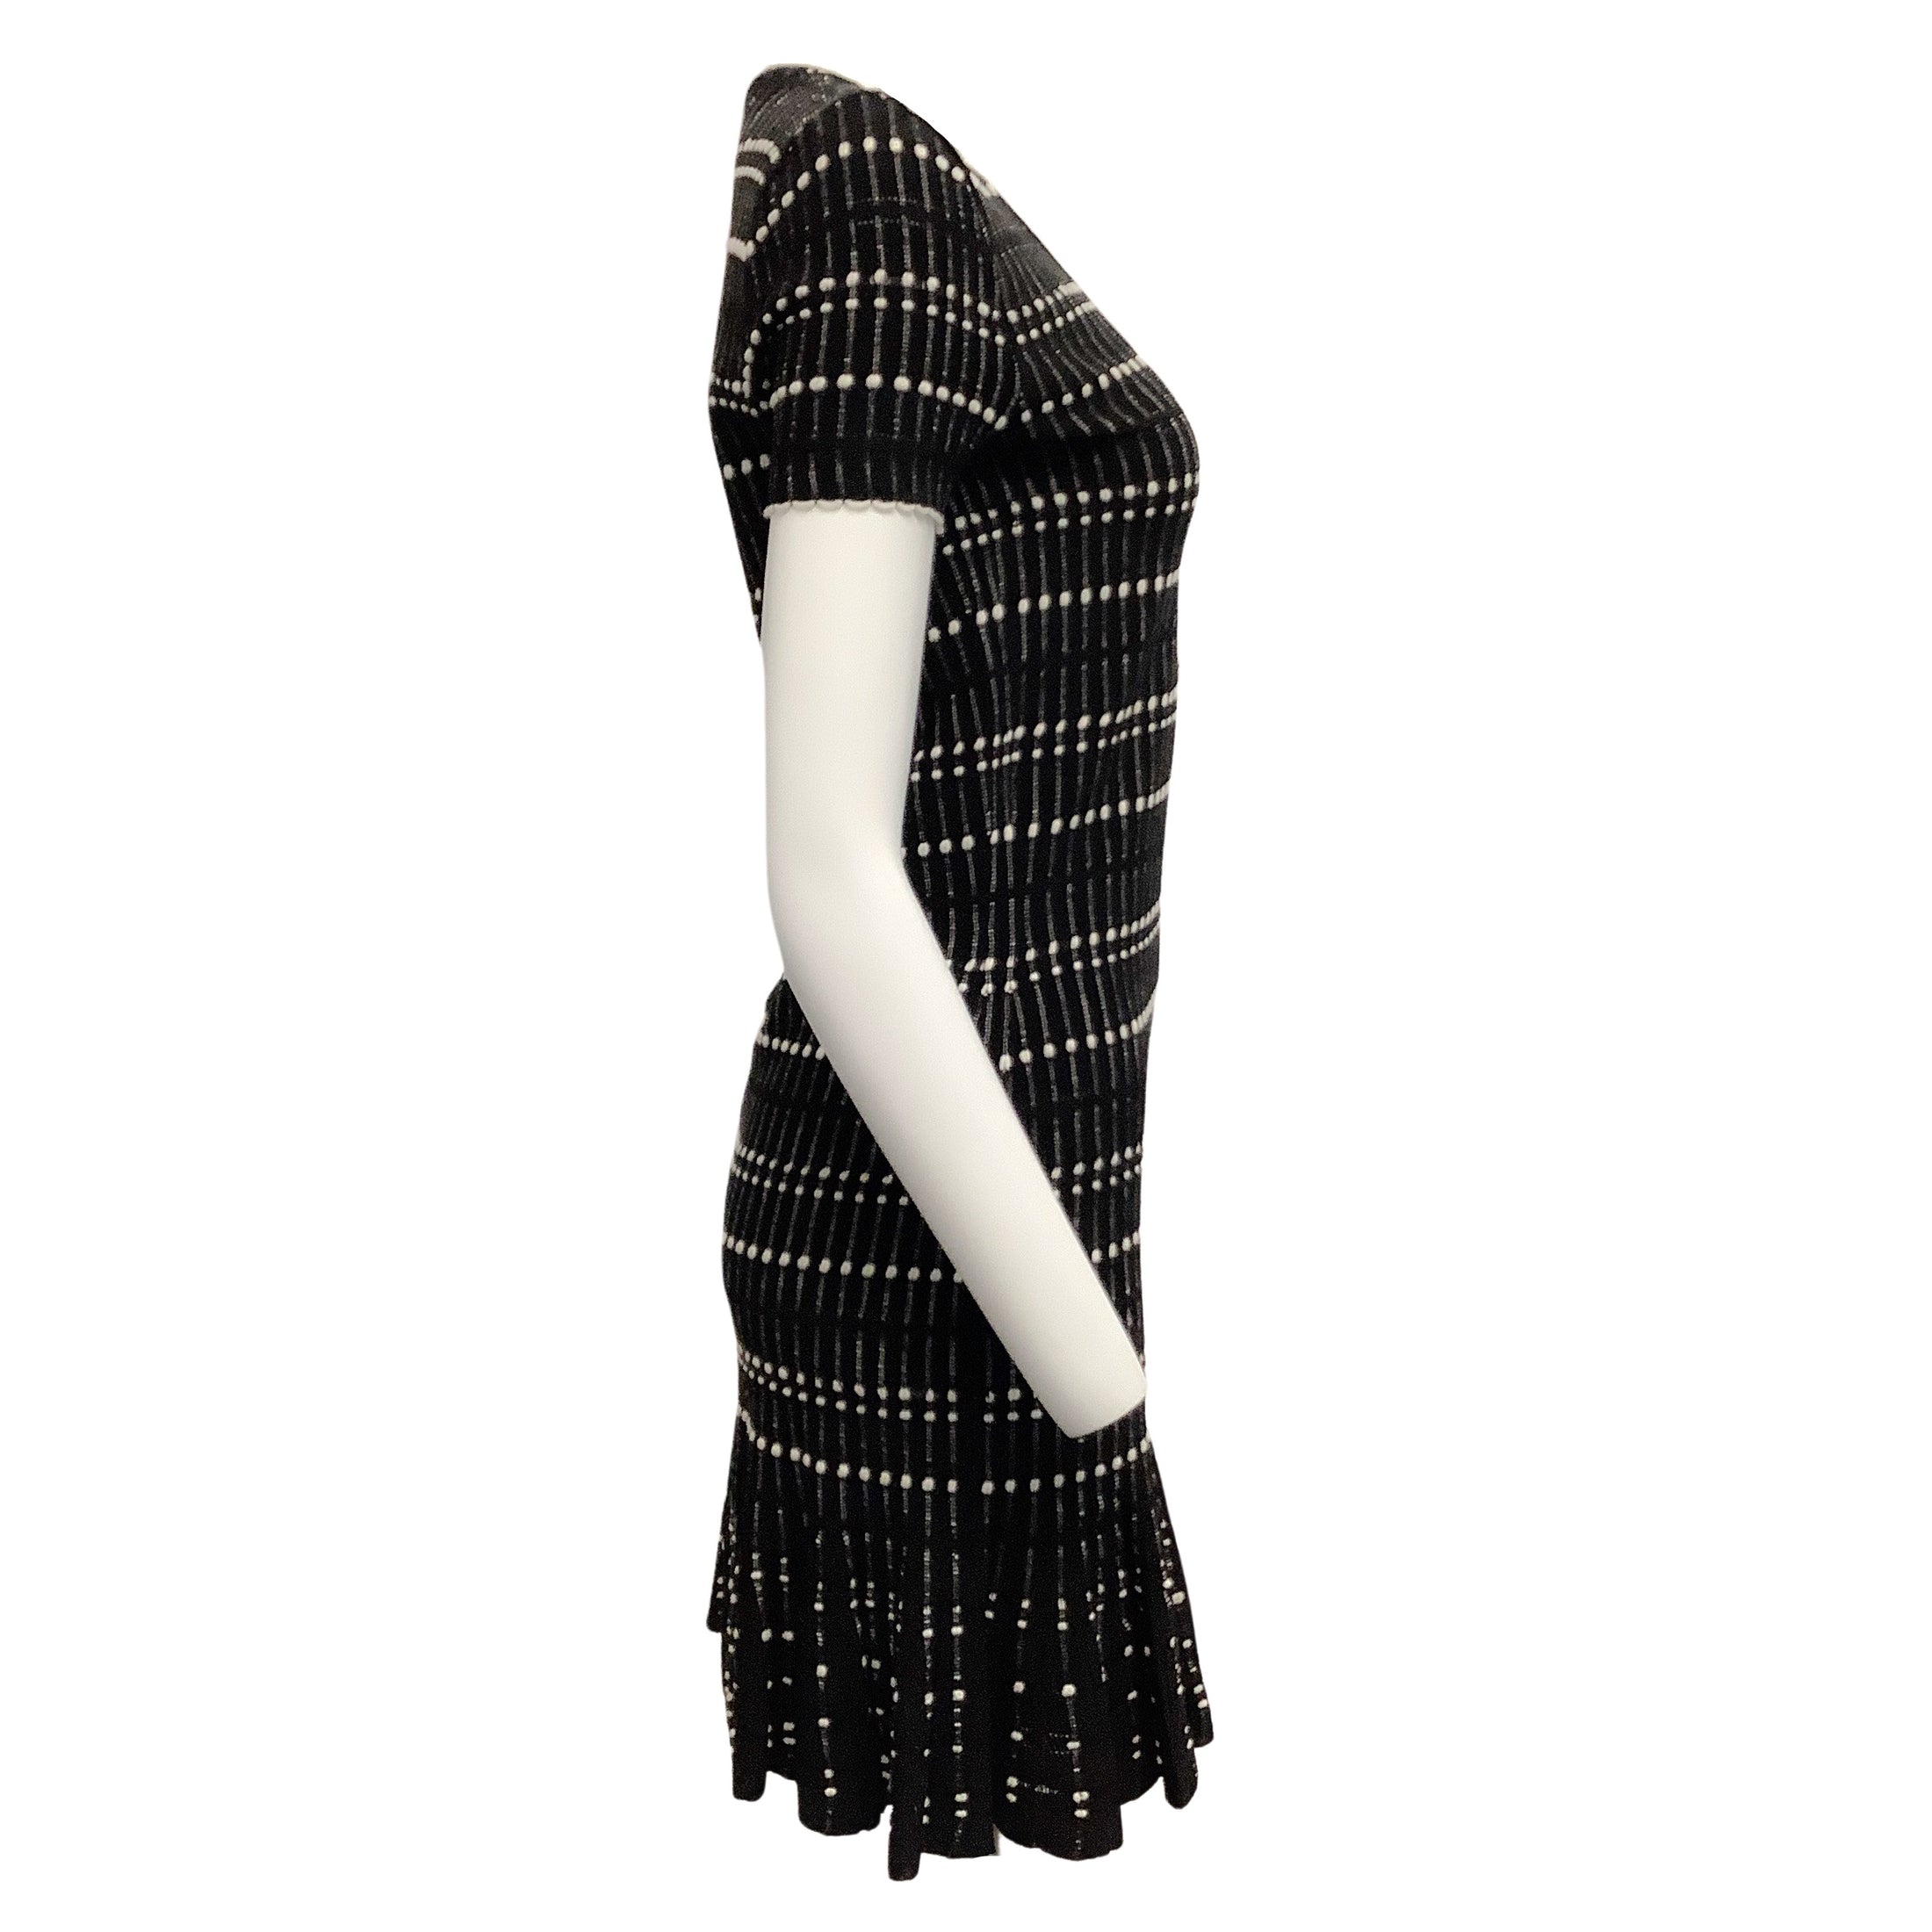 Alexander McQueen Black / White Stretch Knit Short Sleeved Dress